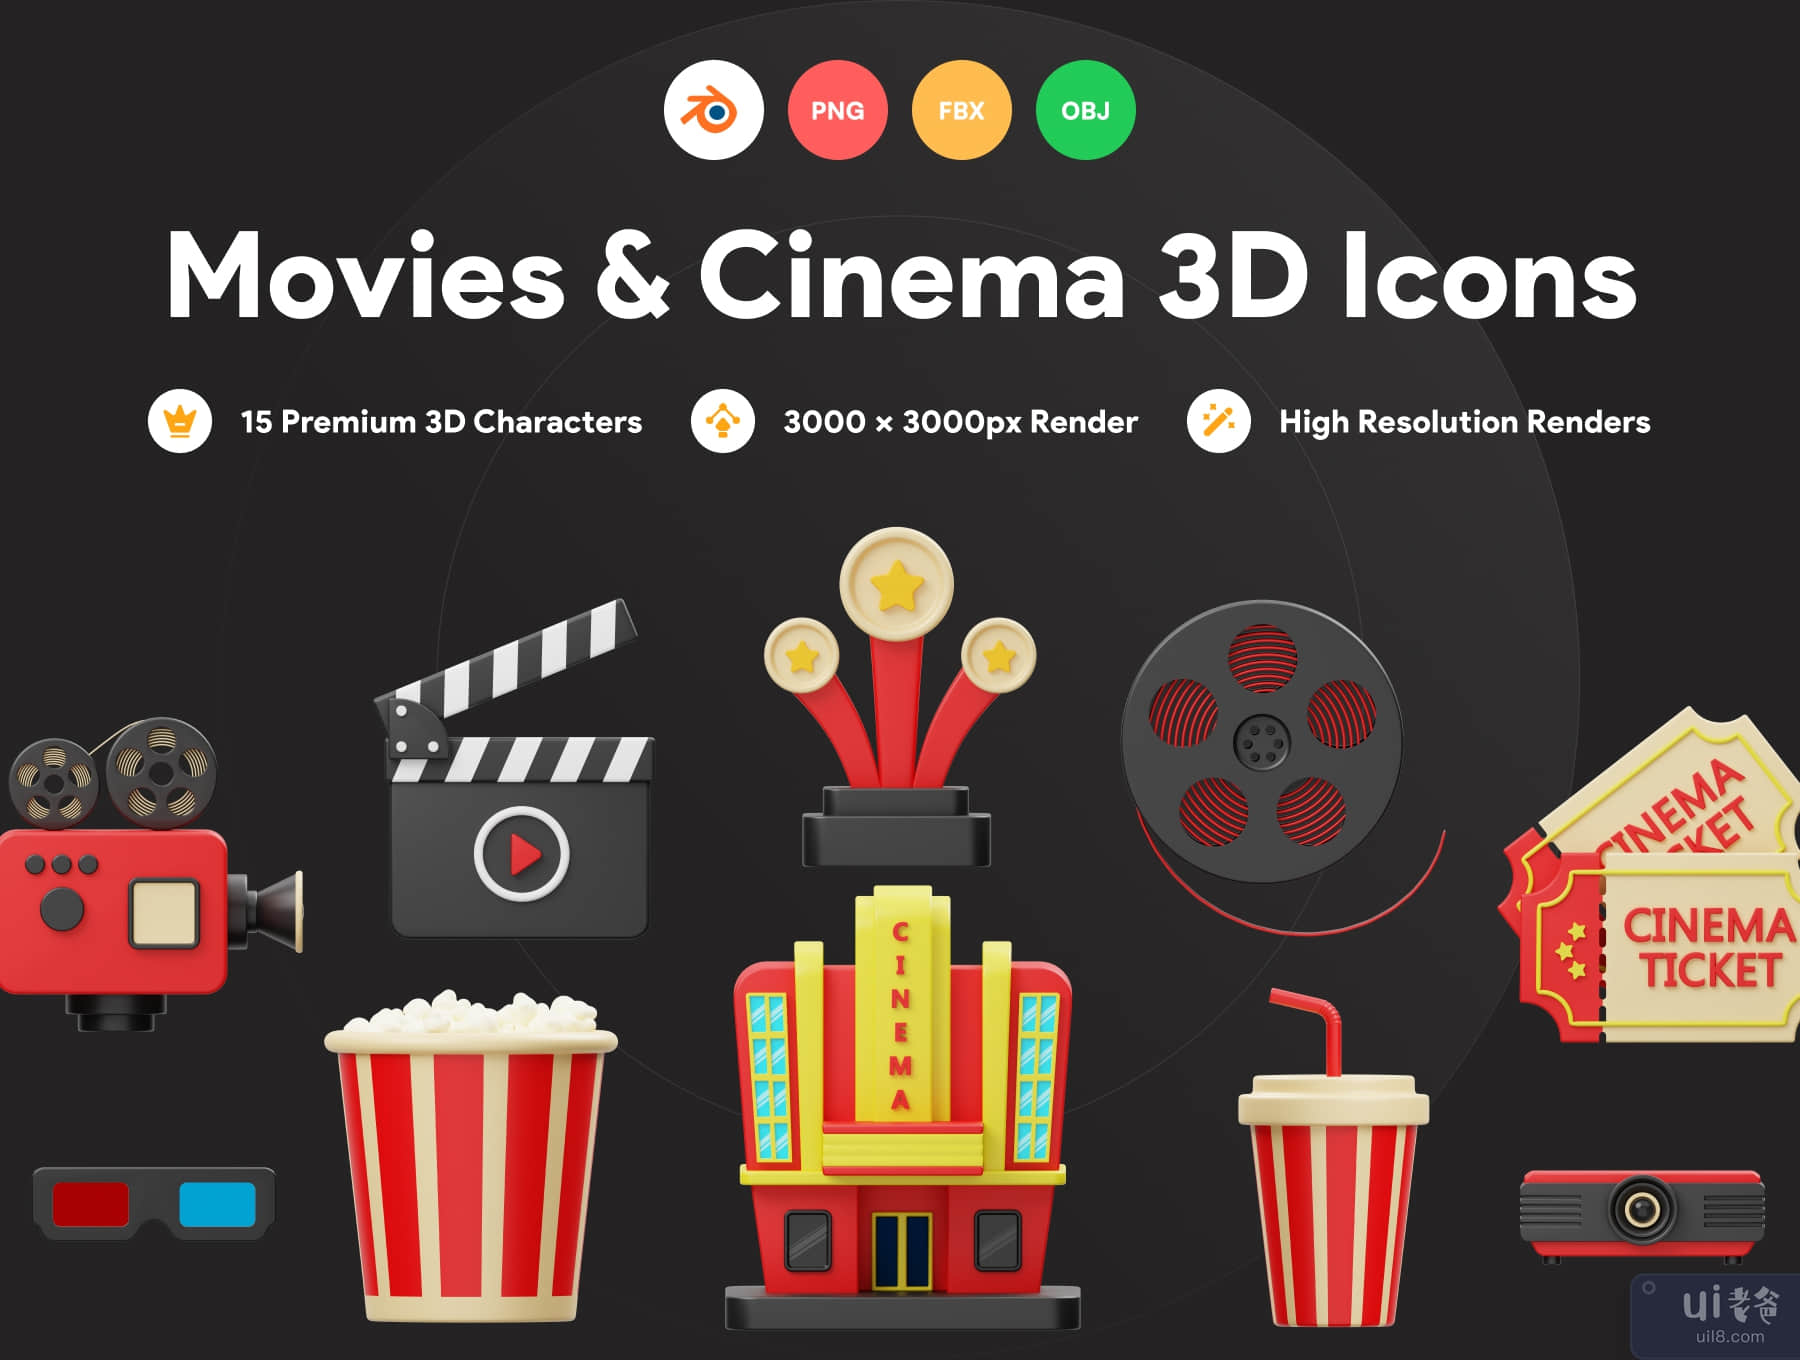 电影院和电影 3D 图标 (Cinema and Movie 3D Icon)插图5